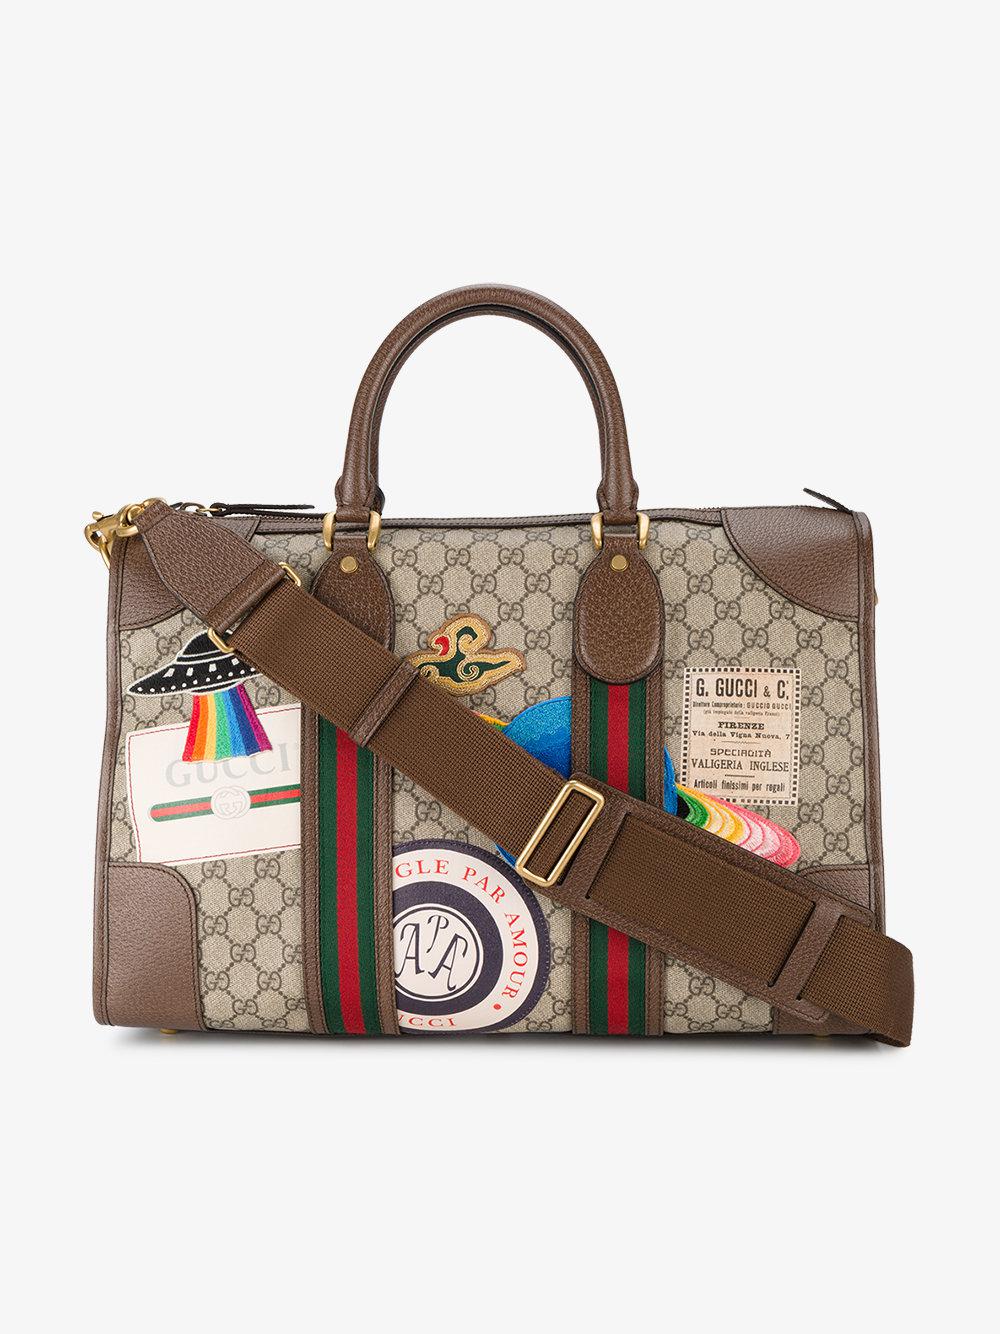 Gucci Courrier Soft Gg Supreme Duffle Bag